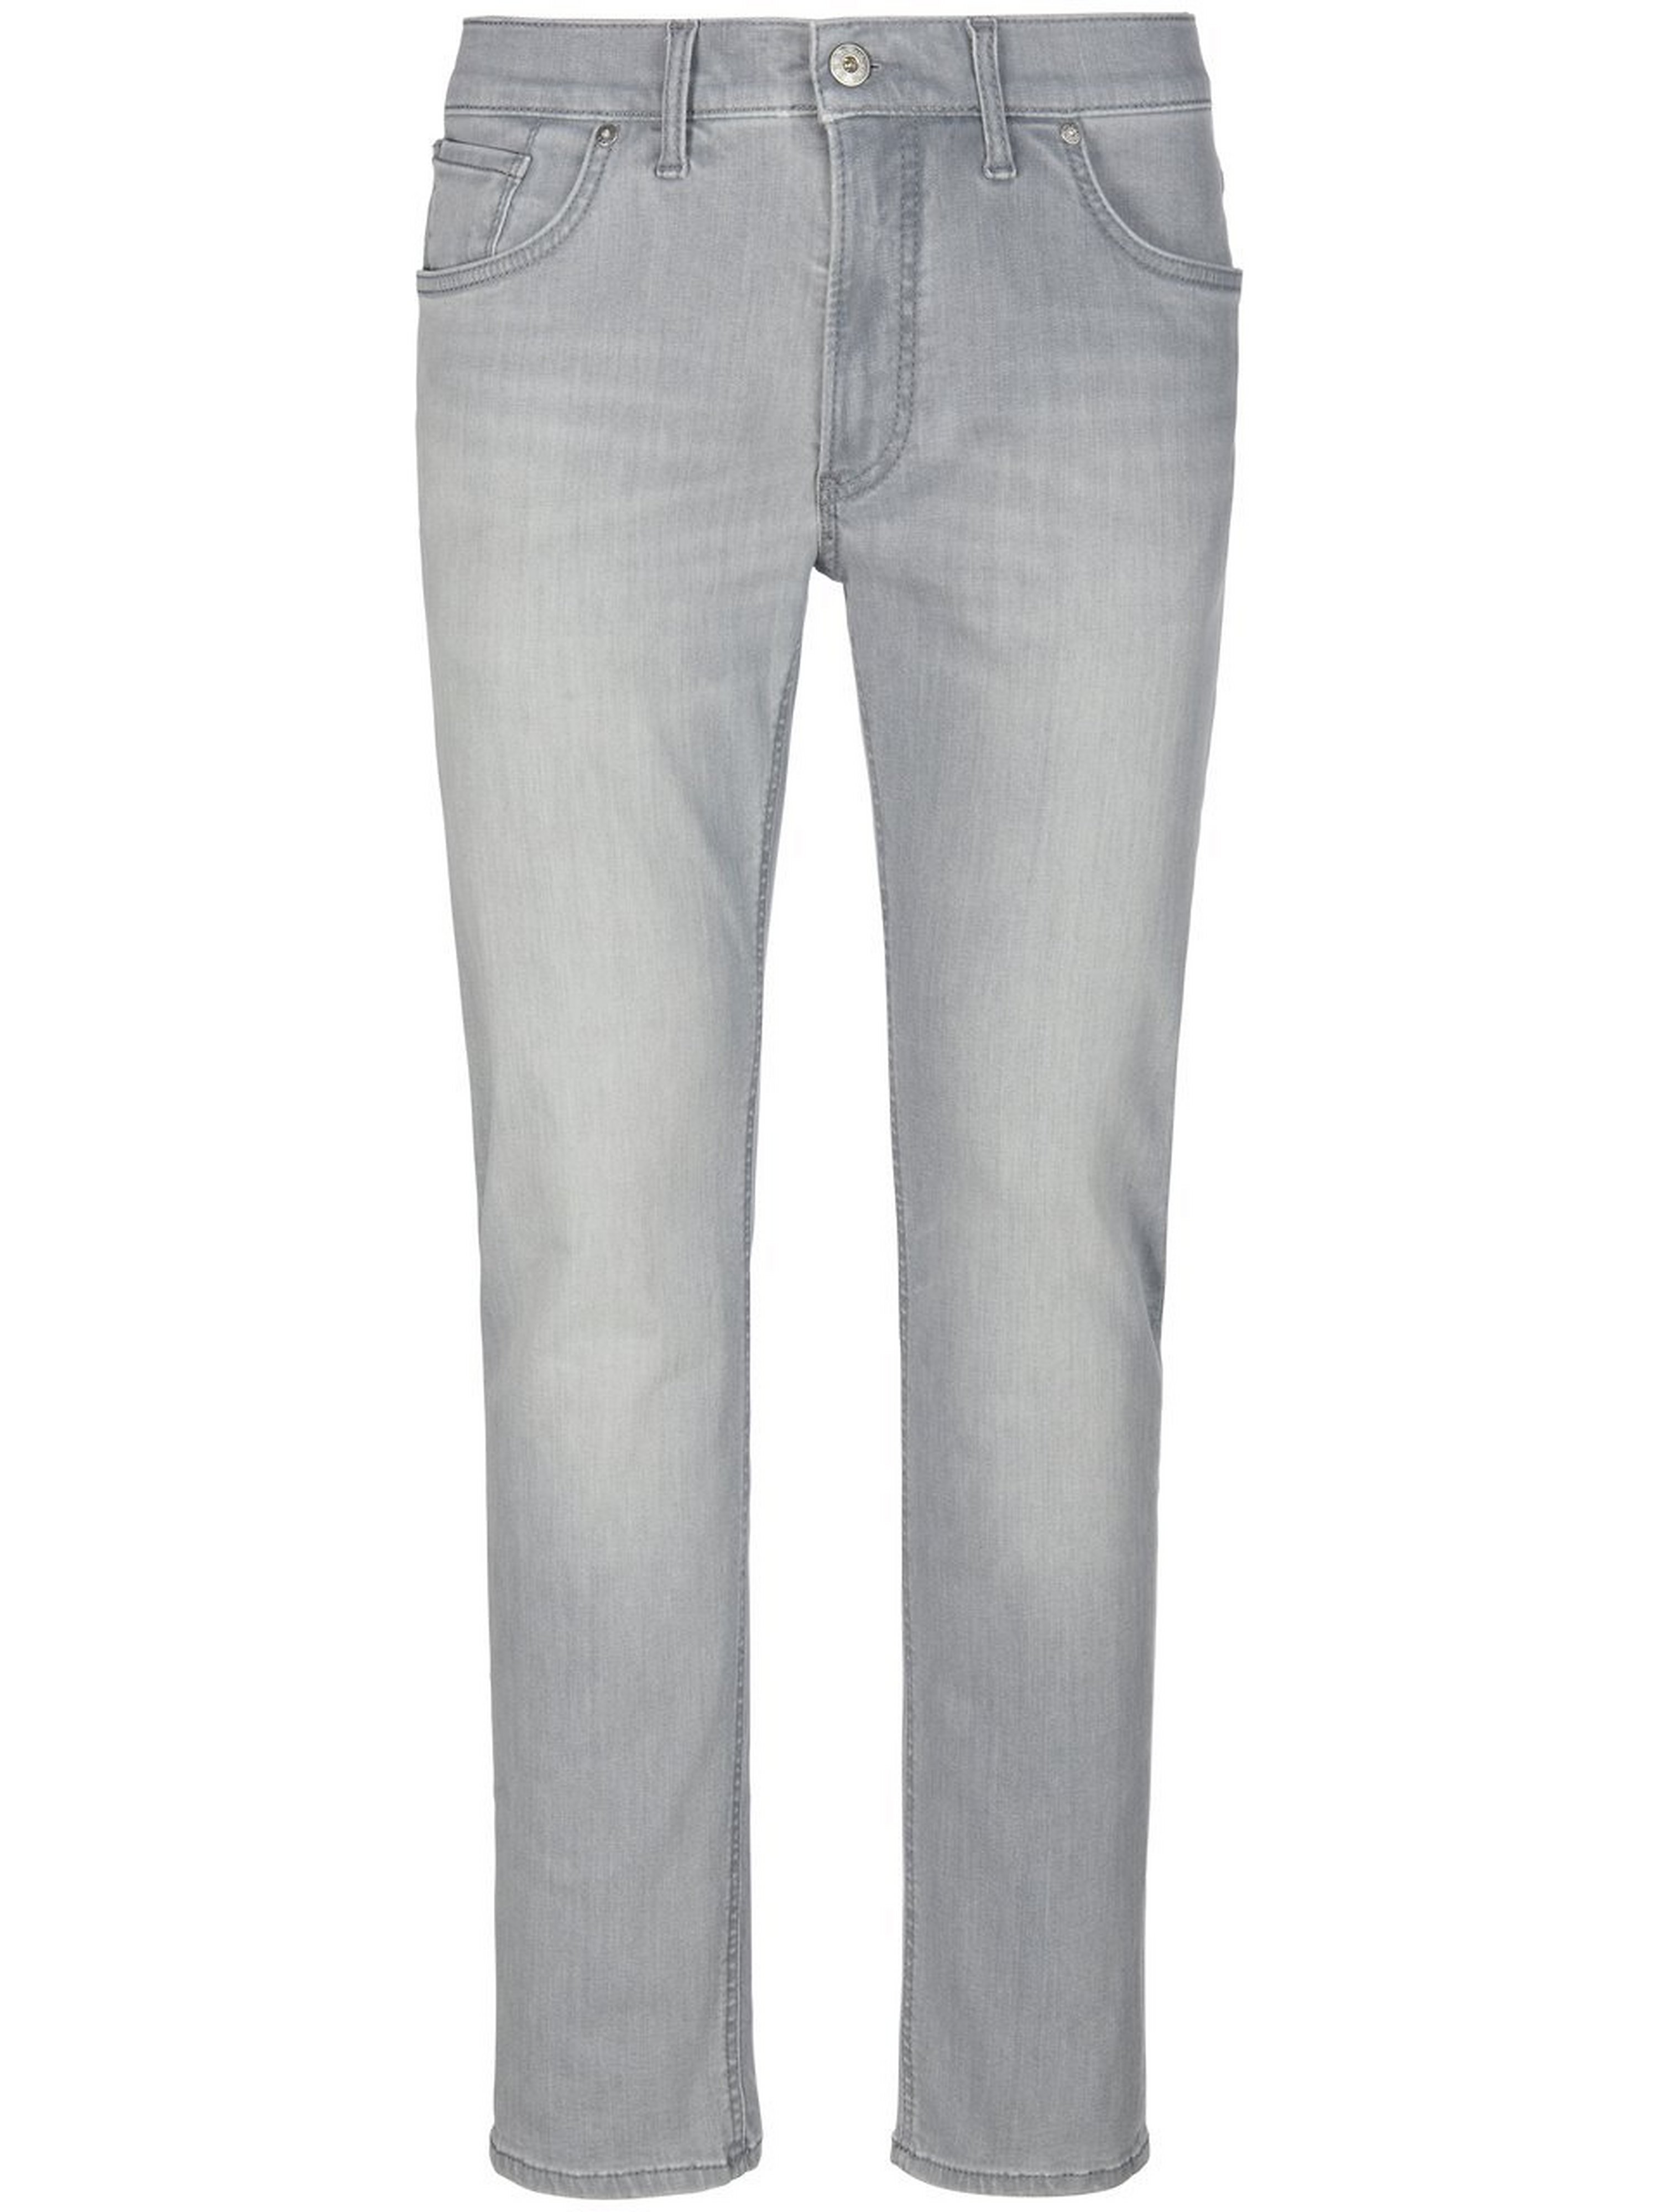 'Modern Fit'-jeans model Chuck Van Brax Feel Good grijs